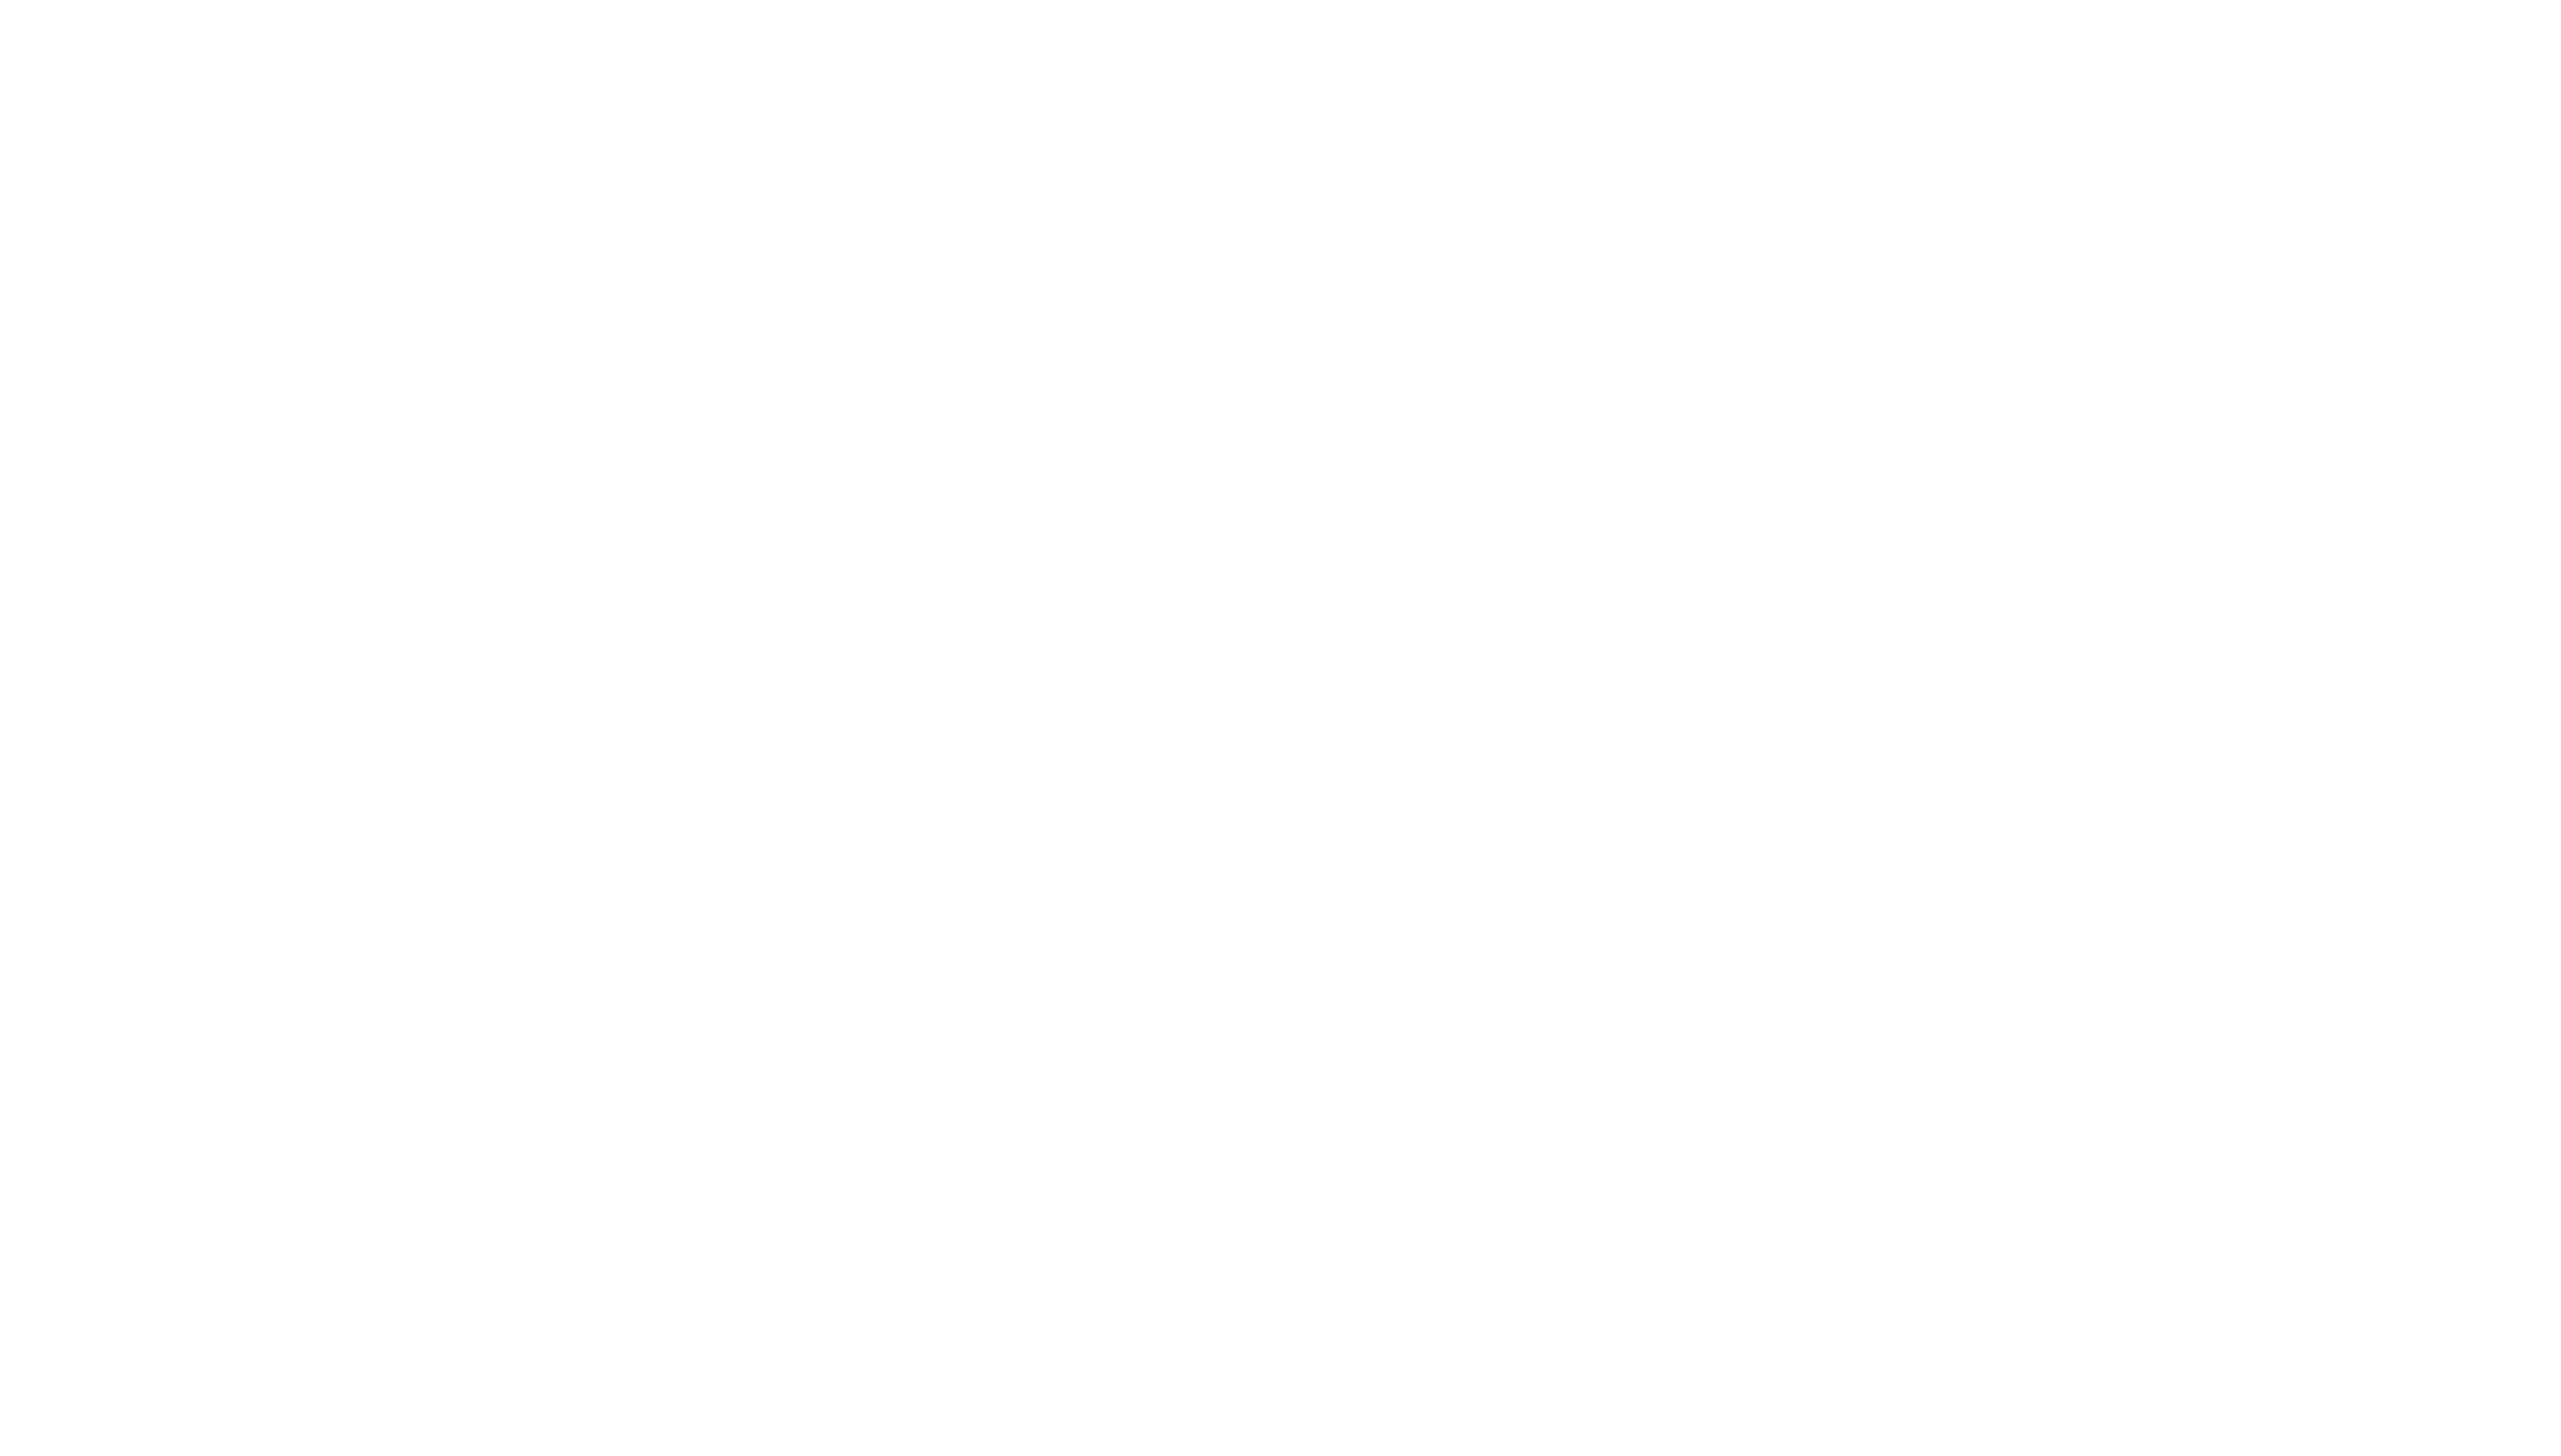 Havas Formula